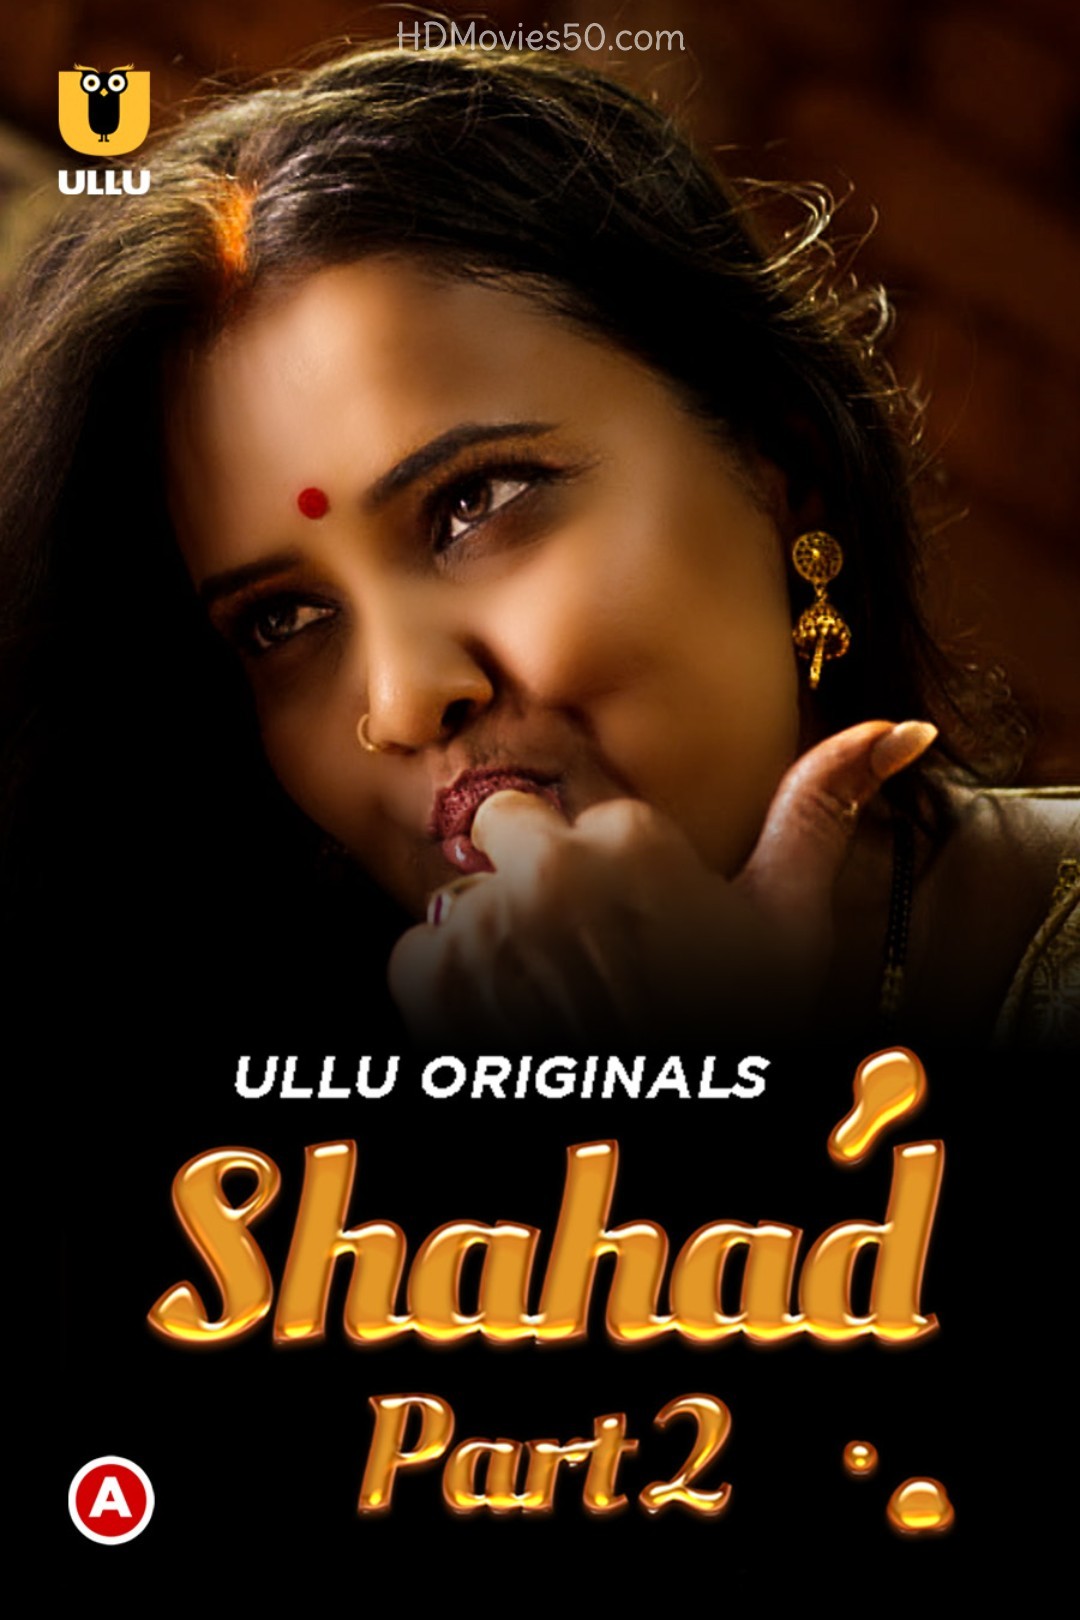 Shahad Part 2 (2022) 1080p HDRip Ullu Hindi Web Series [850MB]